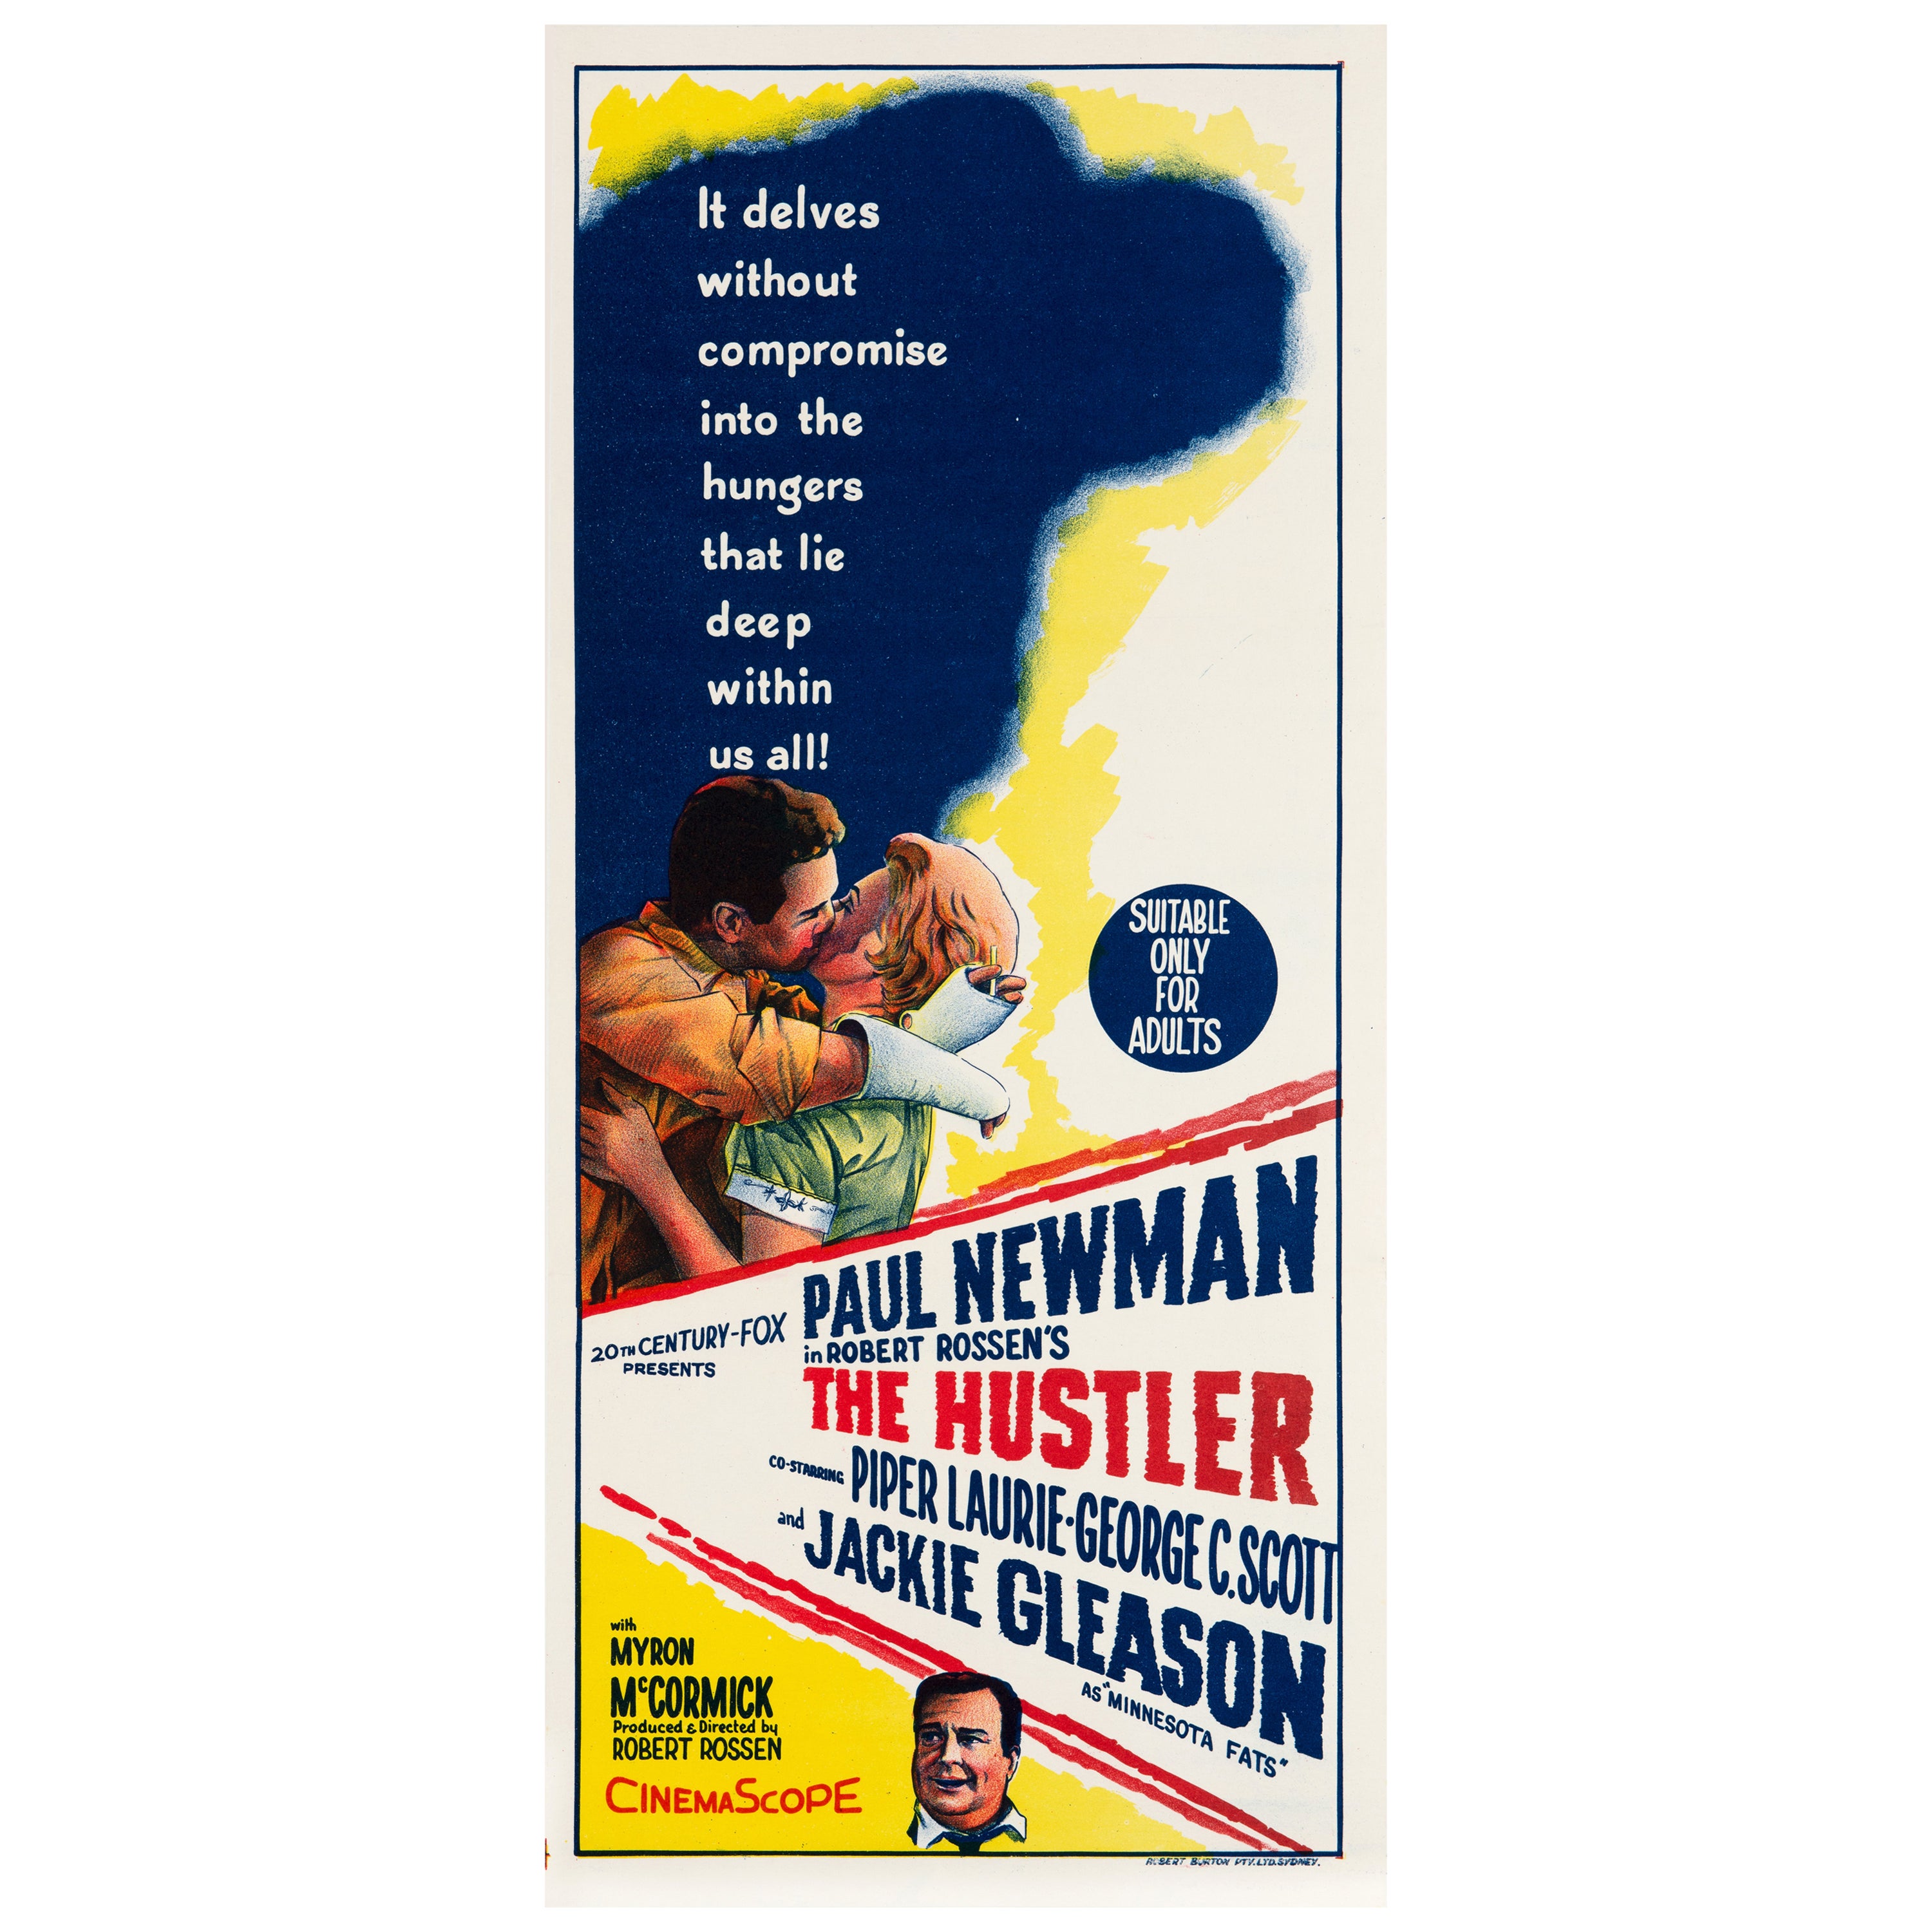 Paul Newman 'The Hustler' Original Vintage Movie Poster, Australian, 1962